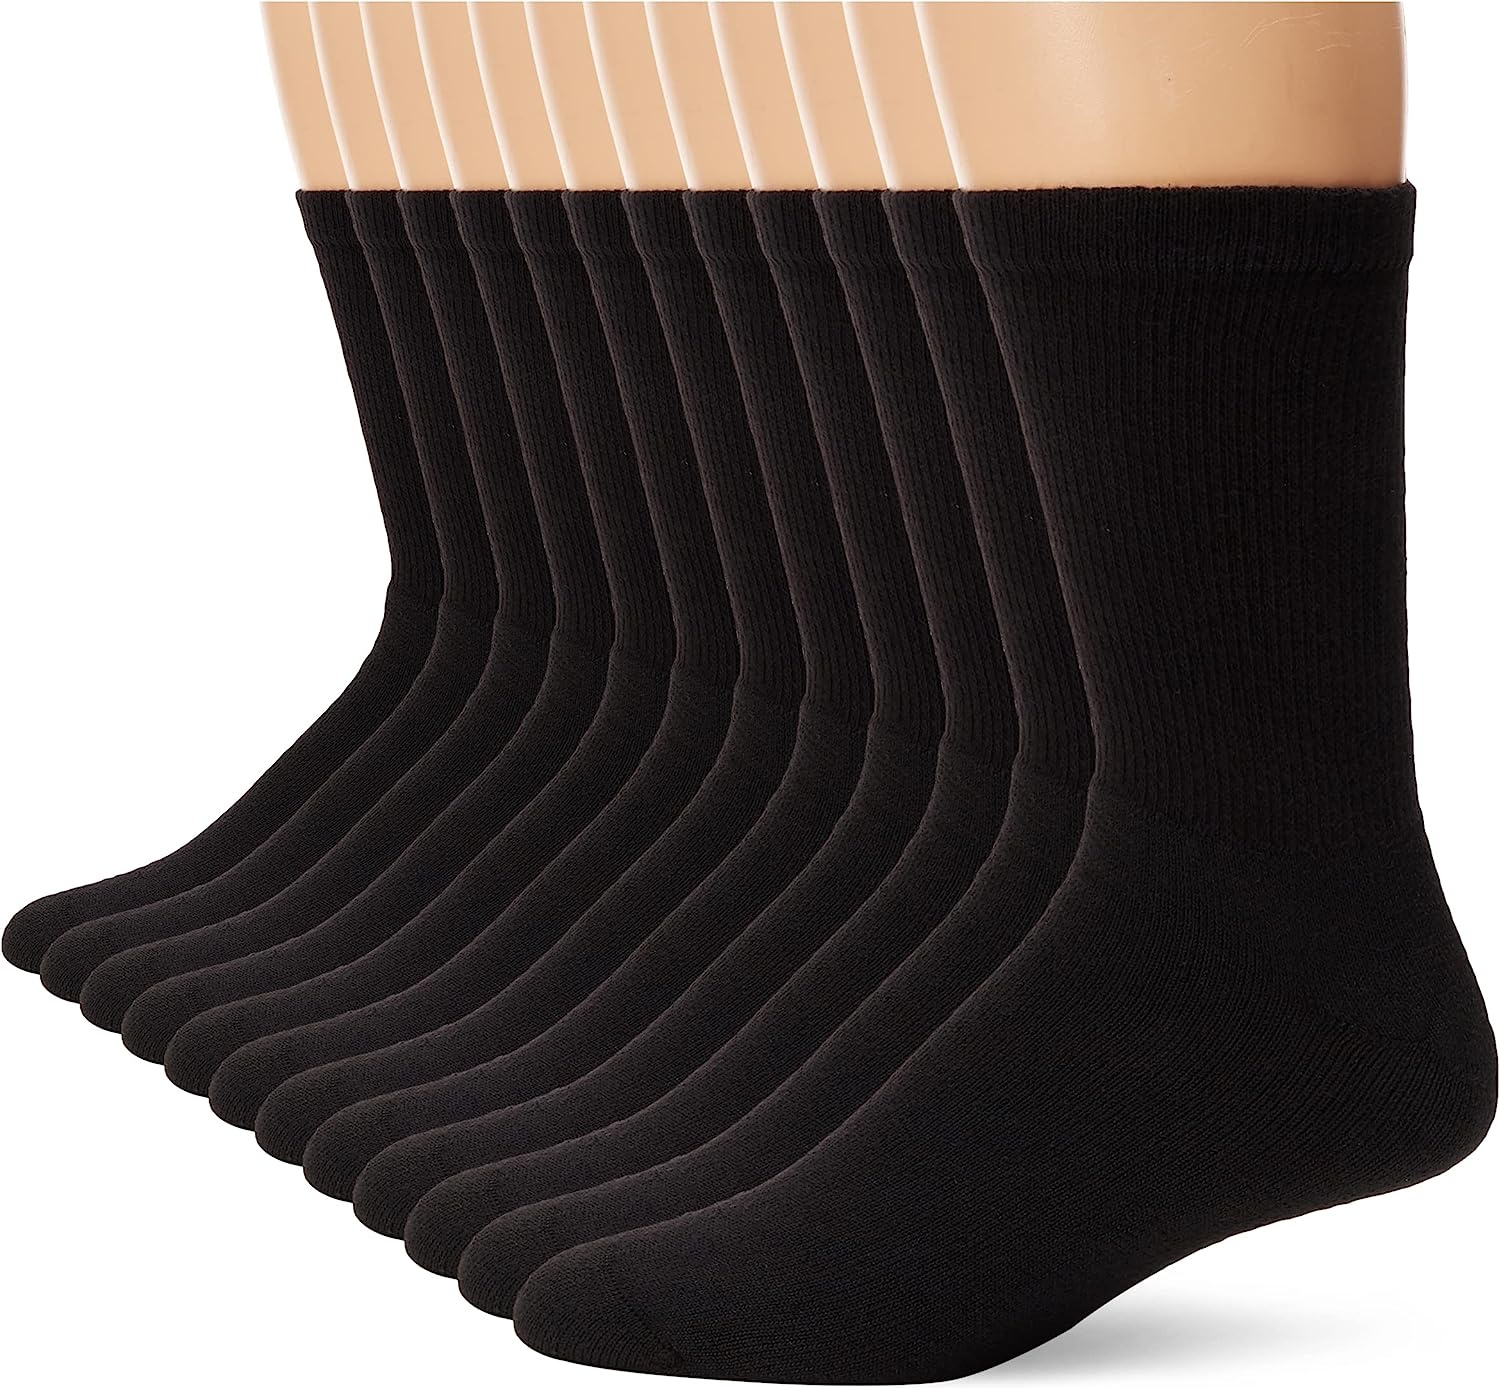 Sifot Men's Double Tough Crew Socks, 12-Pair Pack